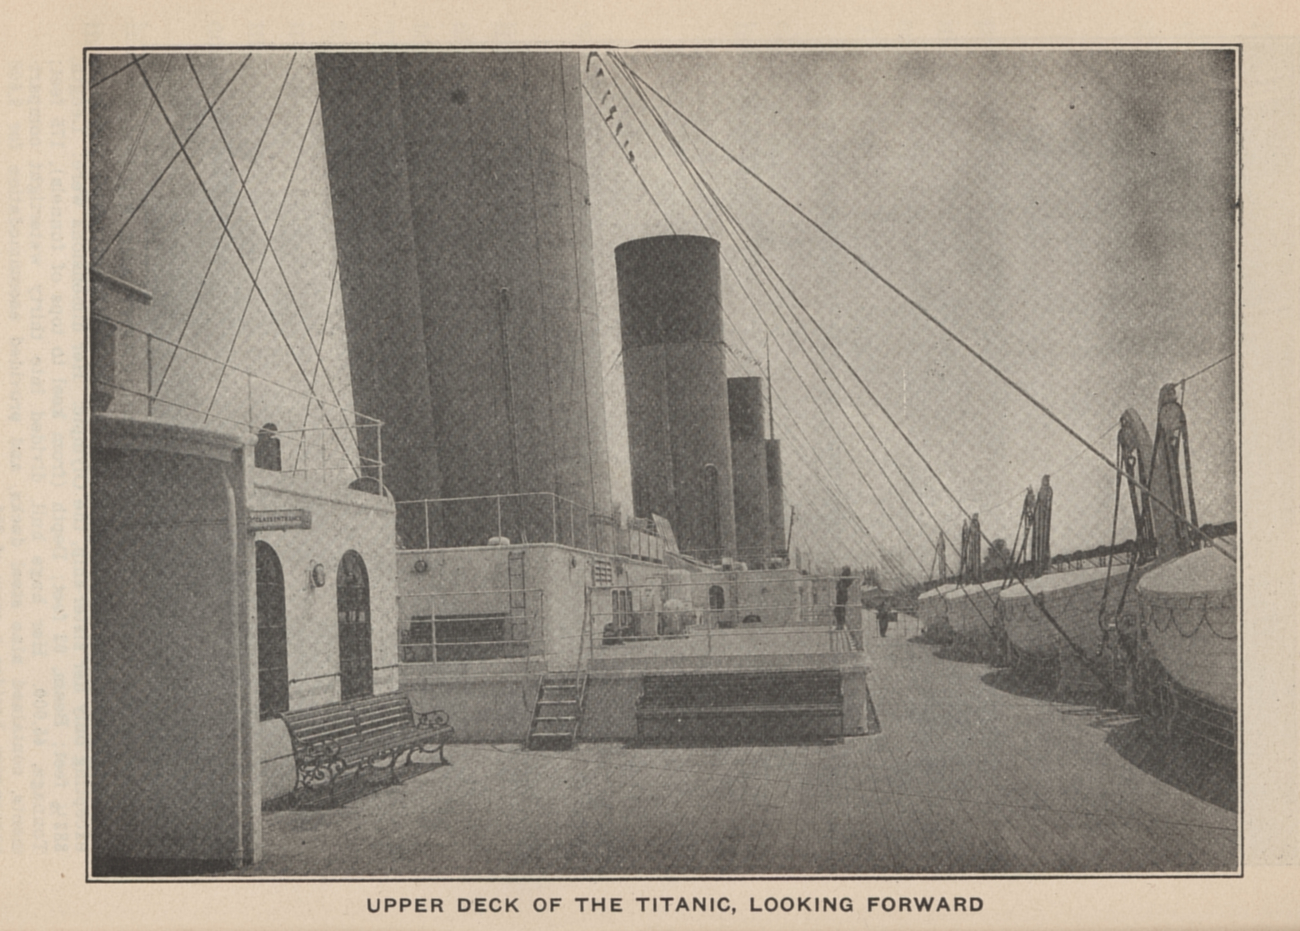 Upper deck of the TITANIC looking forwardIn: Marshall, Logan 1912